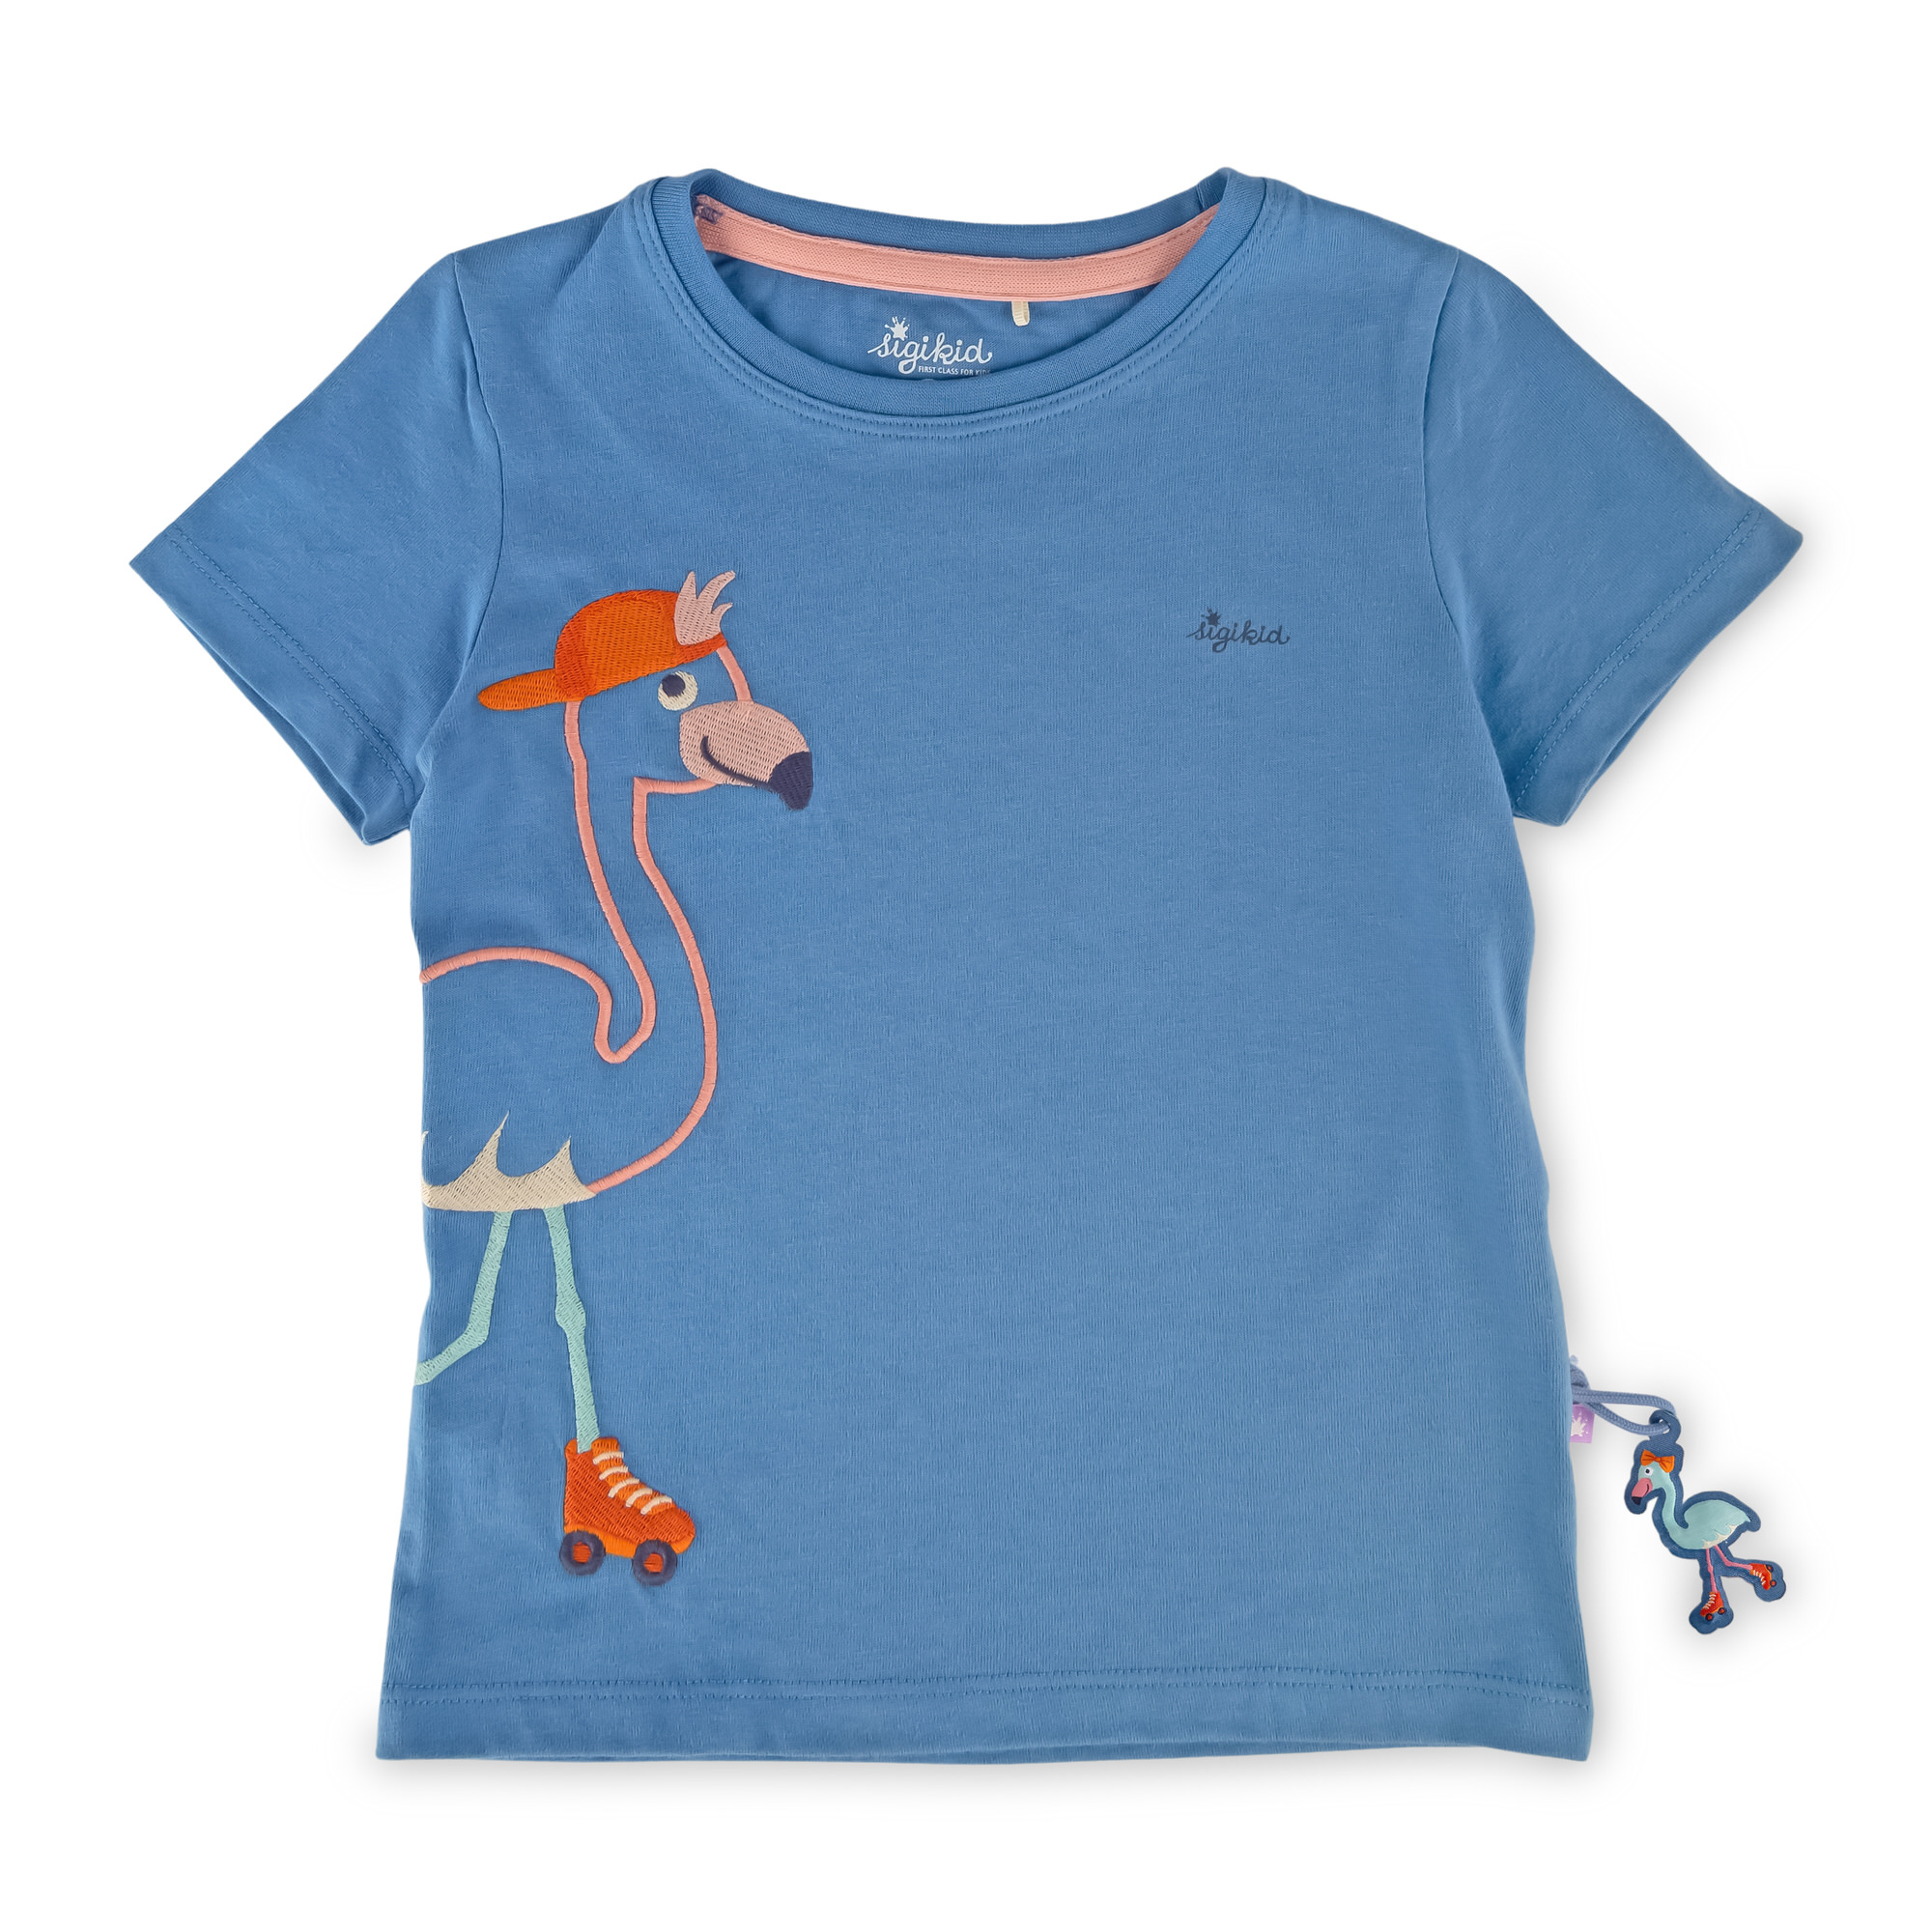 Blaues Kinder T-Shirt mit Flamingo Motiv